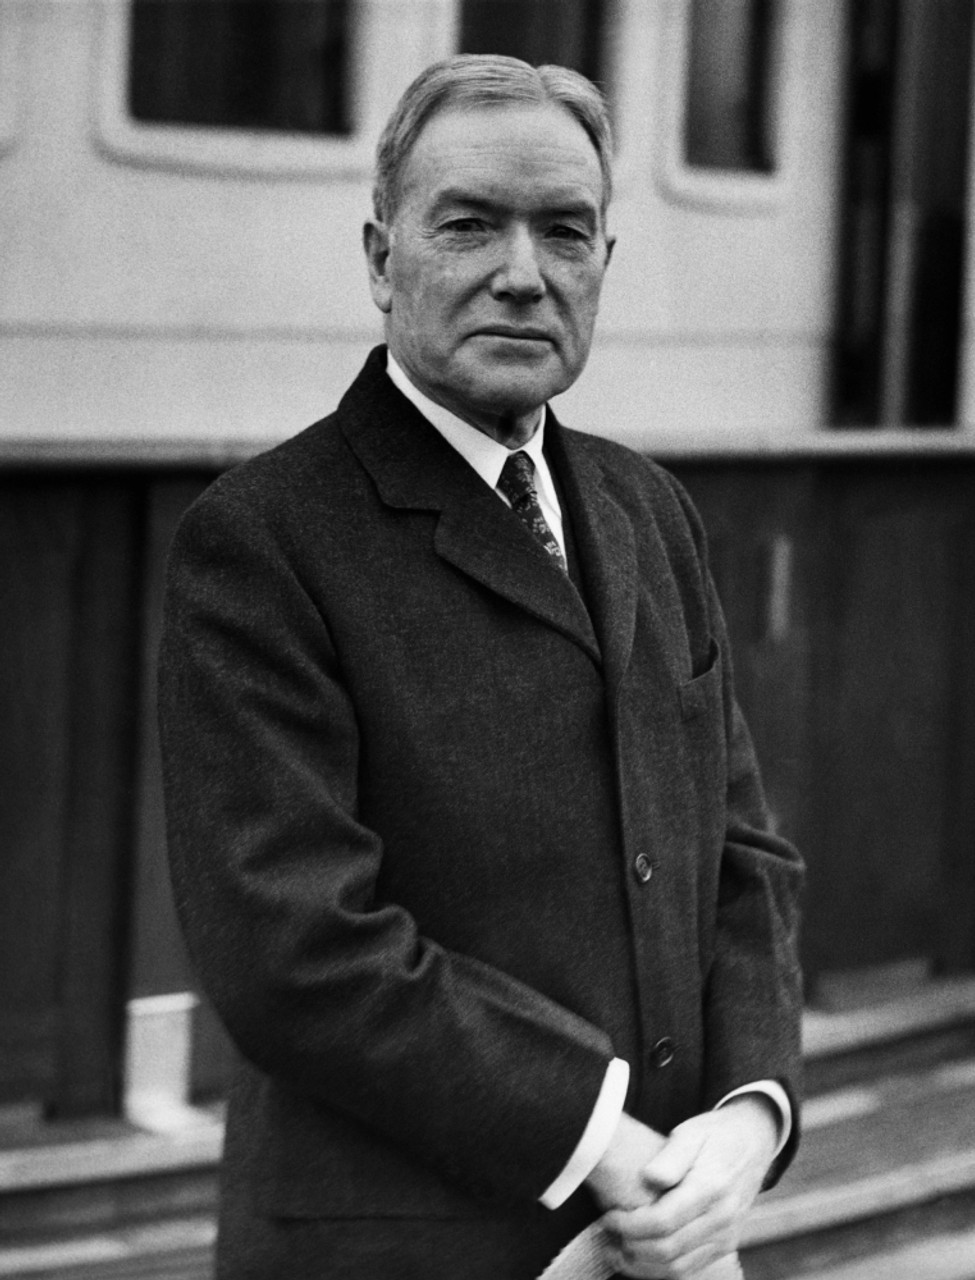 John D. Rockefeller Jr. Biography - Facts, Childhood, Family Life